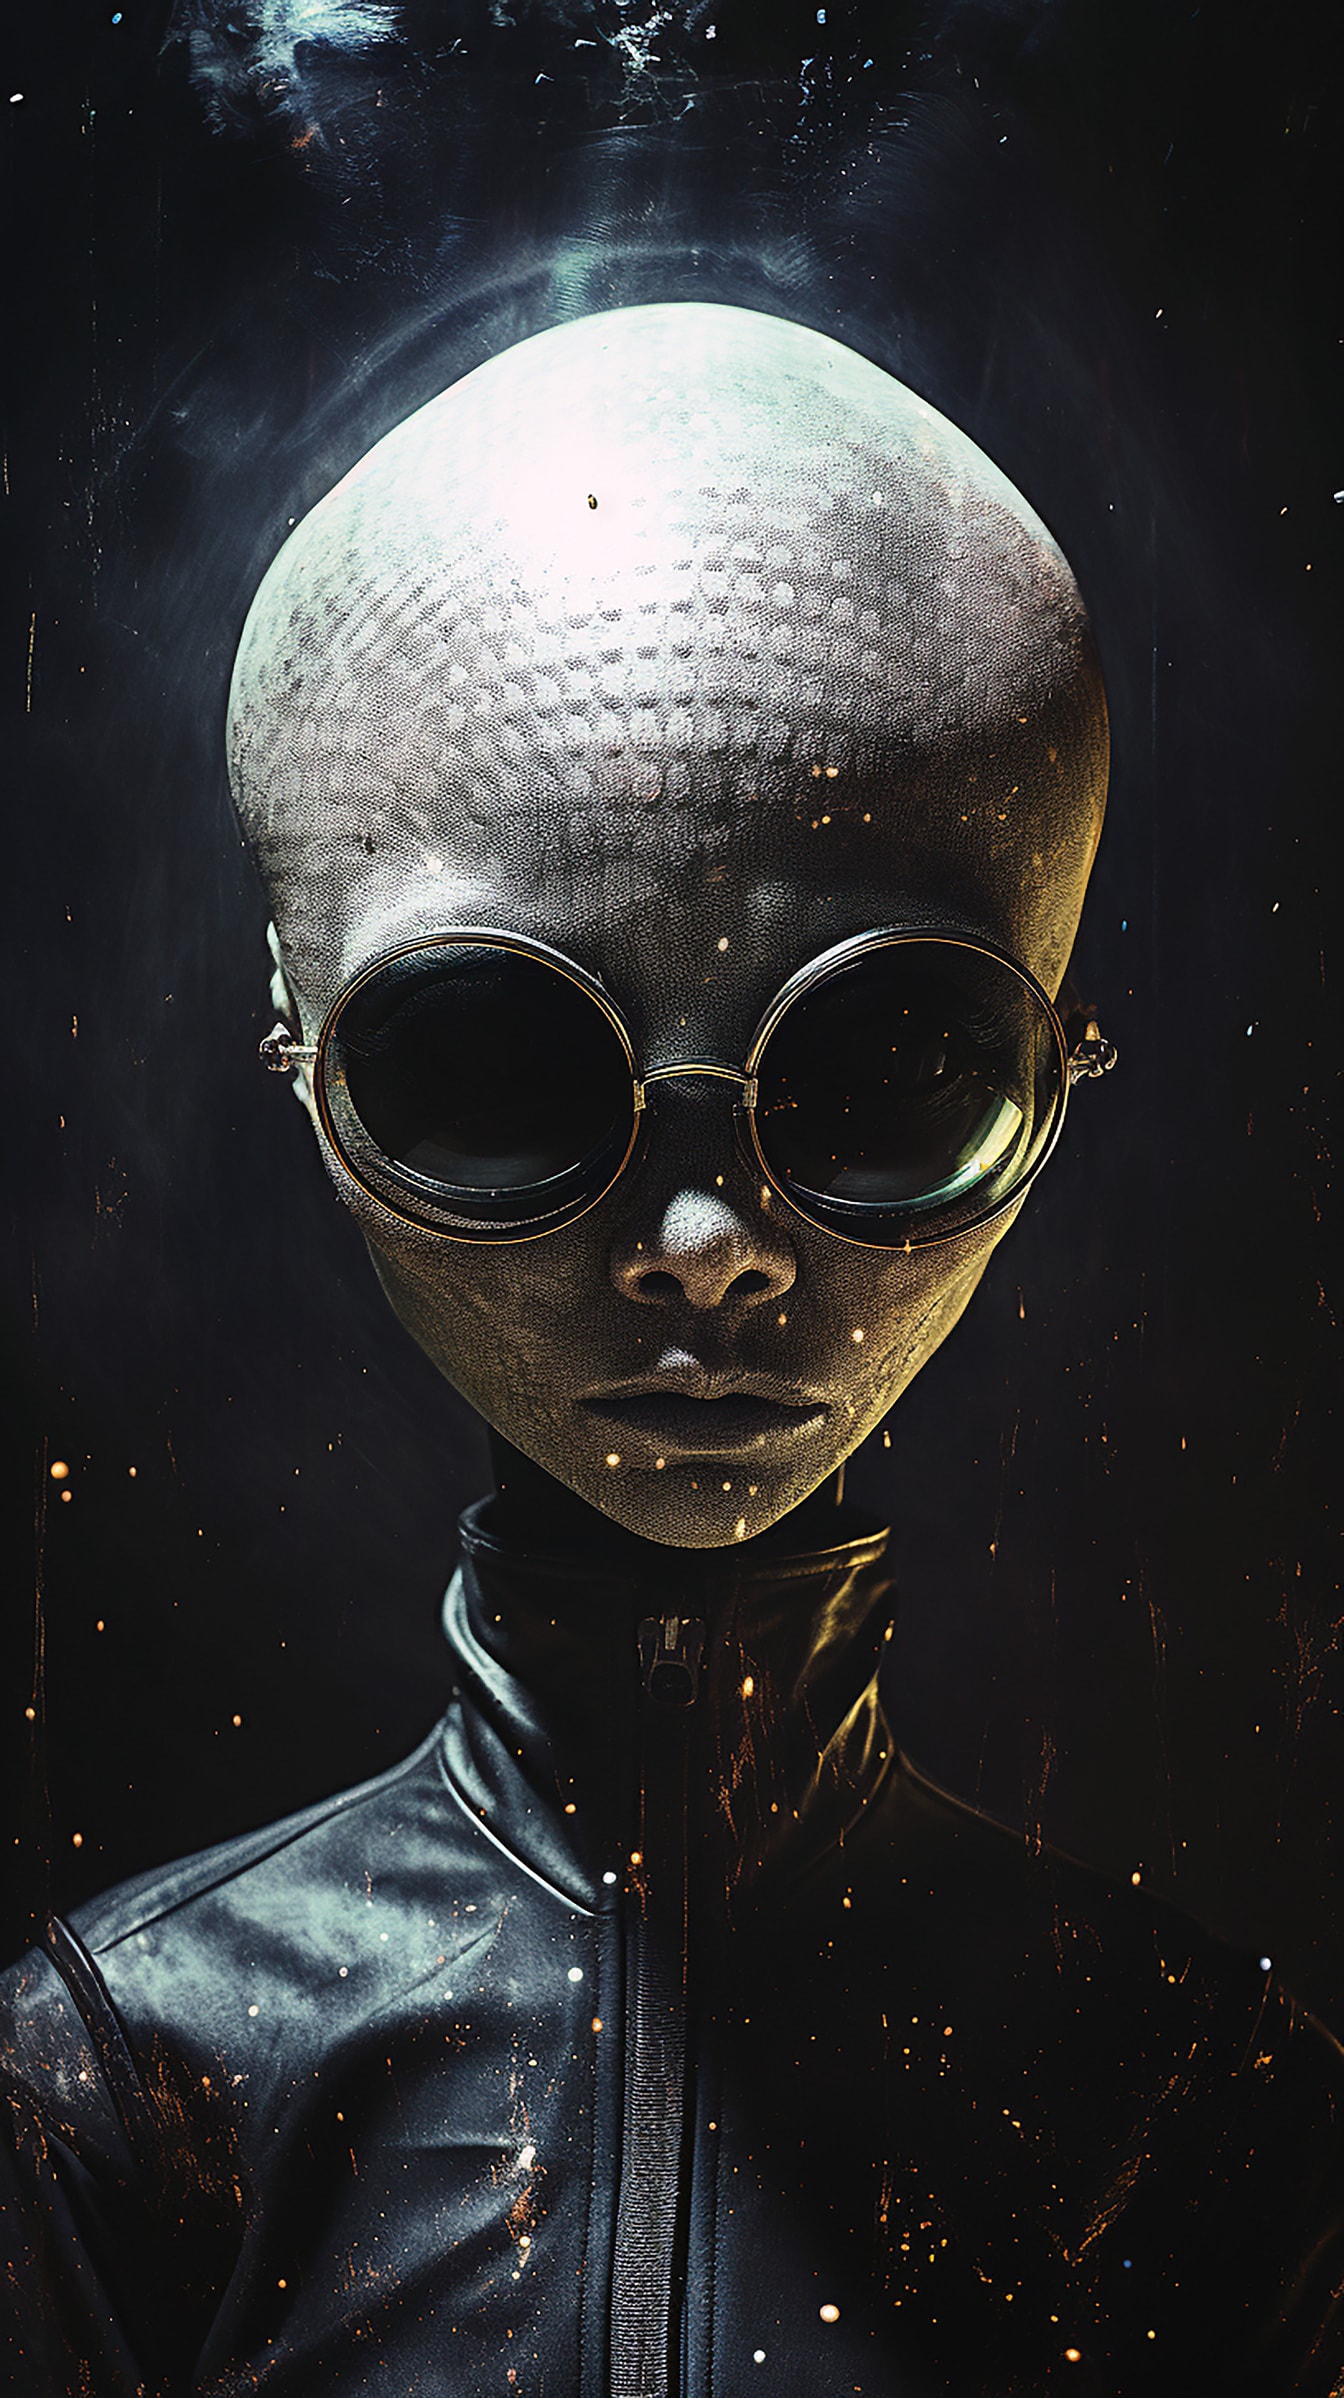 Humanoid alien portrait with black eyeglasses and leather jacket